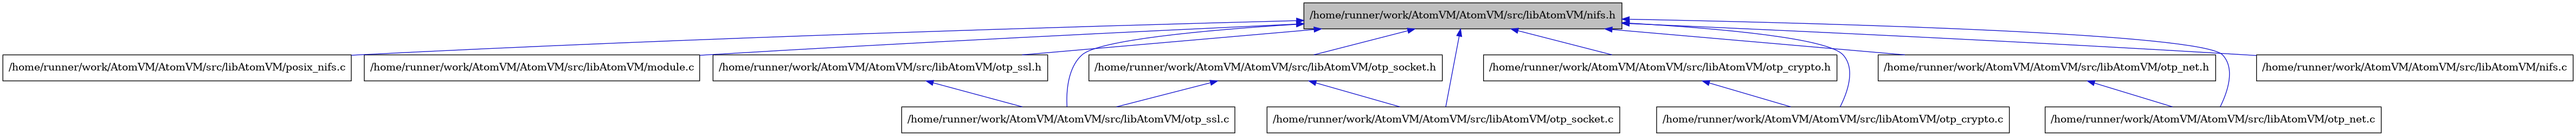 digraph {
    graph [bgcolor="#00000000"]
    node [shape=rectangle style=filled fillcolor="#FFFFFF" font=Helvetica padding=2]
    edge [color="#1414CE"]
    "12" [label="/home/runner/work/AtomVM/AtomVM/src/libAtomVM/posix_nifs.c" tooltip="/home/runner/work/AtomVM/AtomVM/src/libAtomVM/posix_nifs.c"]
    "2" [label="/home/runner/work/AtomVM/AtomVM/src/libAtomVM/module.c" tooltip="/home/runner/work/AtomVM/AtomVM/src/libAtomVM/module.c"]
    "10" [label="/home/runner/work/AtomVM/AtomVM/src/libAtomVM/otp_ssl.c" tooltip="/home/runner/work/AtomVM/AtomVM/src/libAtomVM/otp_ssl.c"]
    "11" [label="/home/runner/work/AtomVM/AtomVM/src/libAtomVM/otp_ssl.h" tooltip="/home/runner/work/AtomVM/AtomVM/src/libAtomVM/otp_ssl.h"]
    "4" [label="/home/runner/work/AtomVM/AtomVM/src/libAtomVM/otp_crypto.c" tooltip="/home/runner/work/AtomVM/AtomVM/src/libAtomVM/otp_crypto.c"]
    "5" [label="/home/runner/work/AtomVM/AtomVM/src/libAtomVM/otp_crypto.h" tooltip="/home/runner/work/AtomVM/AtomVM/src/libAtomVM/otp_crypto.h"]
    "6" [label="/home/runner/work/AtomVM/AtomVM/src/libAtomVM/otp_net.c" tooltip="/home/runner/work/AtomVM/AtomVM/src/libAtomVM/otp_net.c"]
    "7" [label="/home/runner/work/AtomVM/AtomVM/src/libAtomVM/otp_net.h" tooltip="/home/runner/work/AtomVM/AtomVM/src/libAtomVM/otp_net.h"]
    "3" [label="/home/runner/work/AtomVM/AtomVM/src/libAtomVM/nifs.c" tooltip="/home/runner/work/AtomVM/AtomVM/src/libAtomVM/nifs.c"]
    "1" [label="/home/runner/work/AtomVM/AtomVM/src/libAtomVM/nifs.h" tooltip="/home/runner/work/AtomVM/AtomVM/src/libAtomVM/nifs.h" fillcolor="#BFBFBF"]
    "8" [label="/home/runner/work/AtomVM/AtomVM/src/libAtomVM/otp_socket.c" tooltip="/home/runner/work/AtomVM/AtomVM/src/libAtomVM/otp_socket.c"]
    "9" [label="/home/runner/work/AtomVM/AtomVM/src/libAtomVM/otp_socket.h" tooltip="/home/runner/work/AtomVM/AtomVM/src/libAtomVM/otp_socket.h"]
    "11" -> "10" [dir=back tooltip="include"]
    "5" -> "4" [dir=back tooltip="include"]
    "7" -> "6" [dir=back tooltip="include"]
    "1" -> "2" [dir=back tooltip="include"]
    "1" -> "3" [dir=back tooltip="include"]
    "1" -> "4" [dir=back tooltip="include"]
    "1" -> "5" [dir=back tooltip="include"]
    "1" -> "6" [dir=back tooltip="include"]
    "1" -> "7" [dir=back tooltip="include"]
    "1" -> "8" [dir=back tooltip="include"]
    "1" -> "9" [dir=back tooltip="include"]
    "1" -> "10" [dir=back tooltip="include"]
    "1" -> "11" [dir=back tooltip="include"]
    "1" -> "12" [dir=back tooltip="include"]
    "9" -> "8" [dir=back tooltip="include"]
    "9" -> "10" [dir=back tooltip="include"]
}